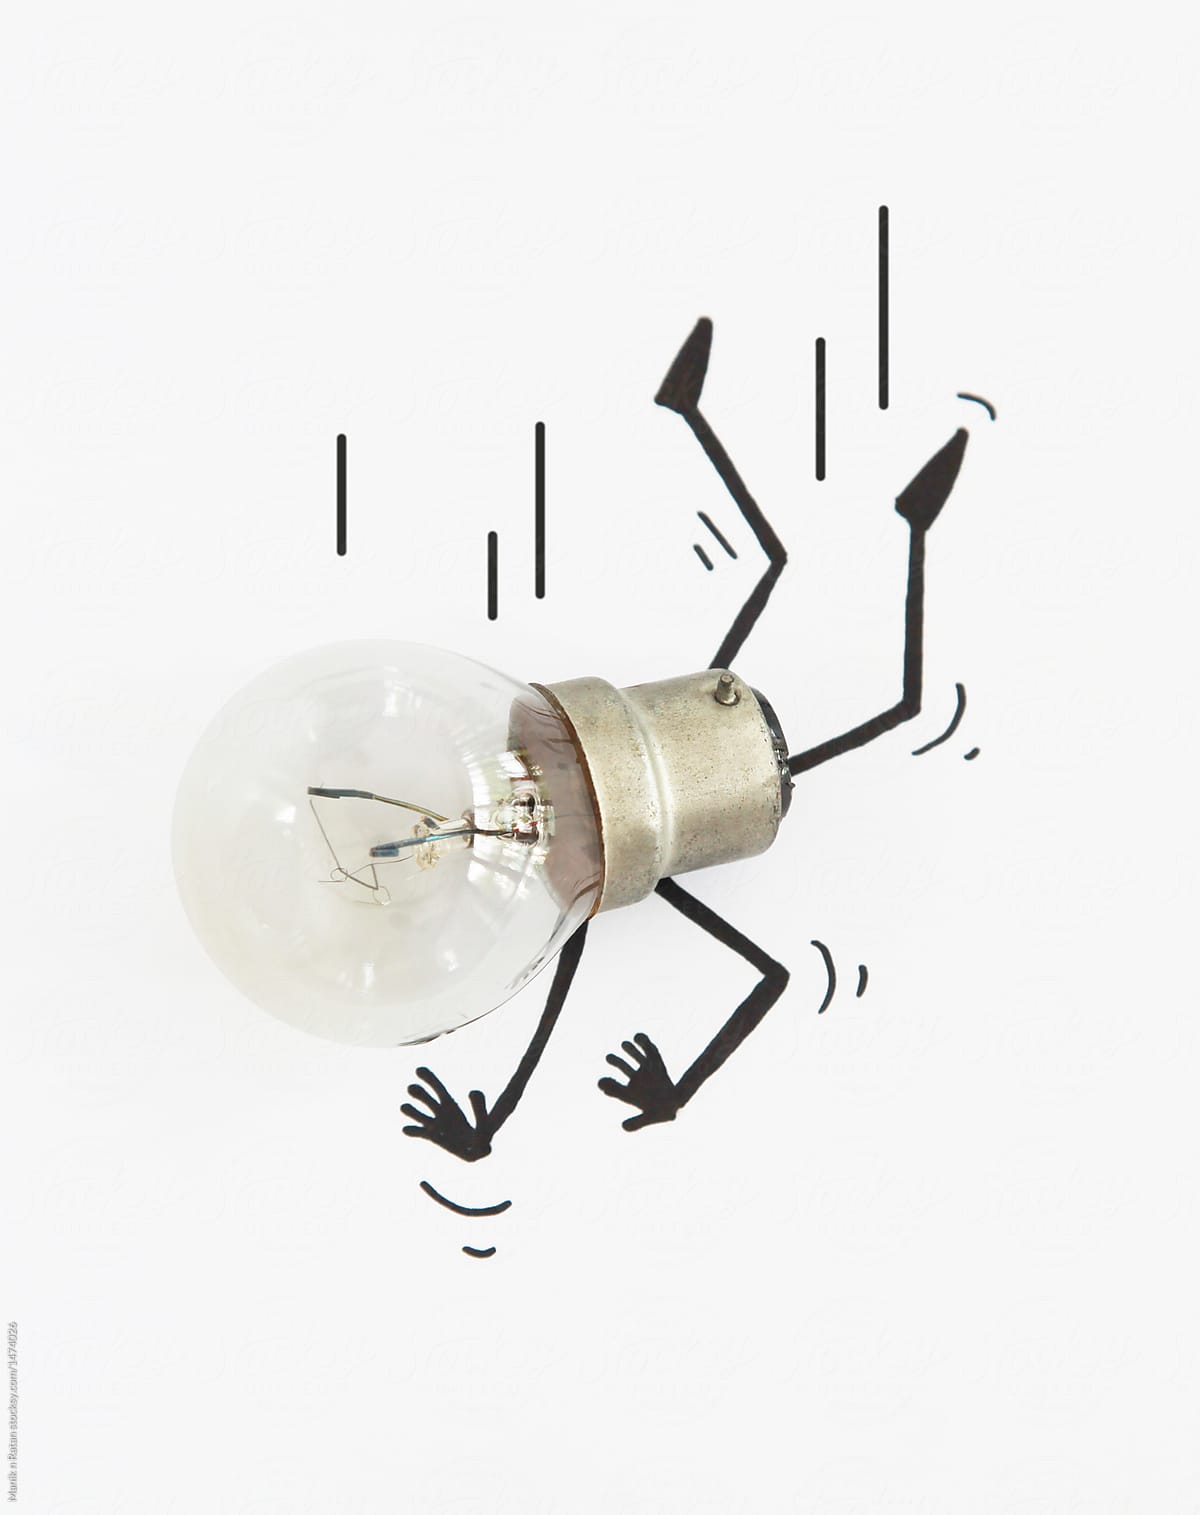 Fallen Idea bulb